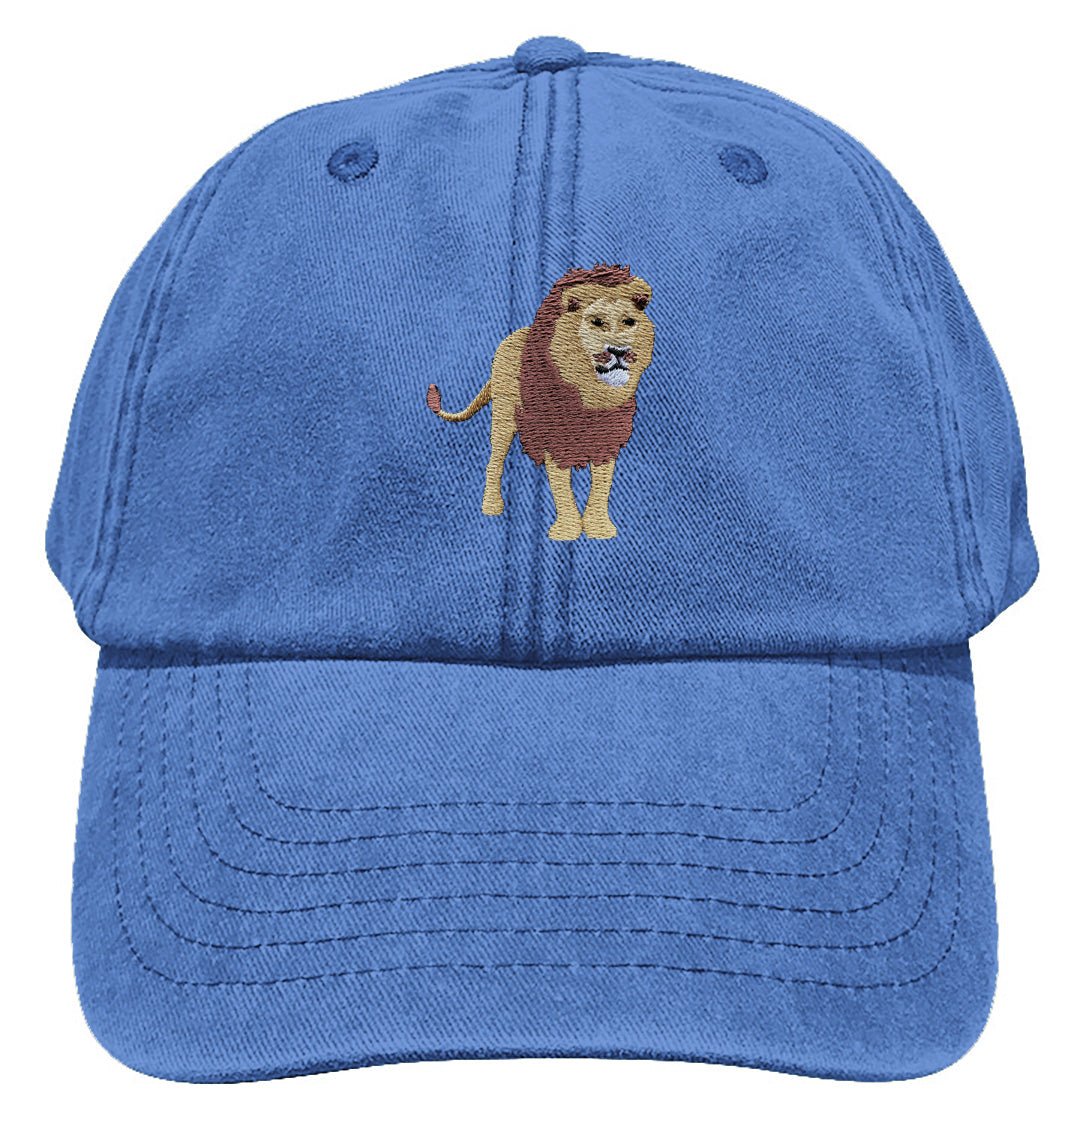 Lion Baseball Cap - Blue Panda